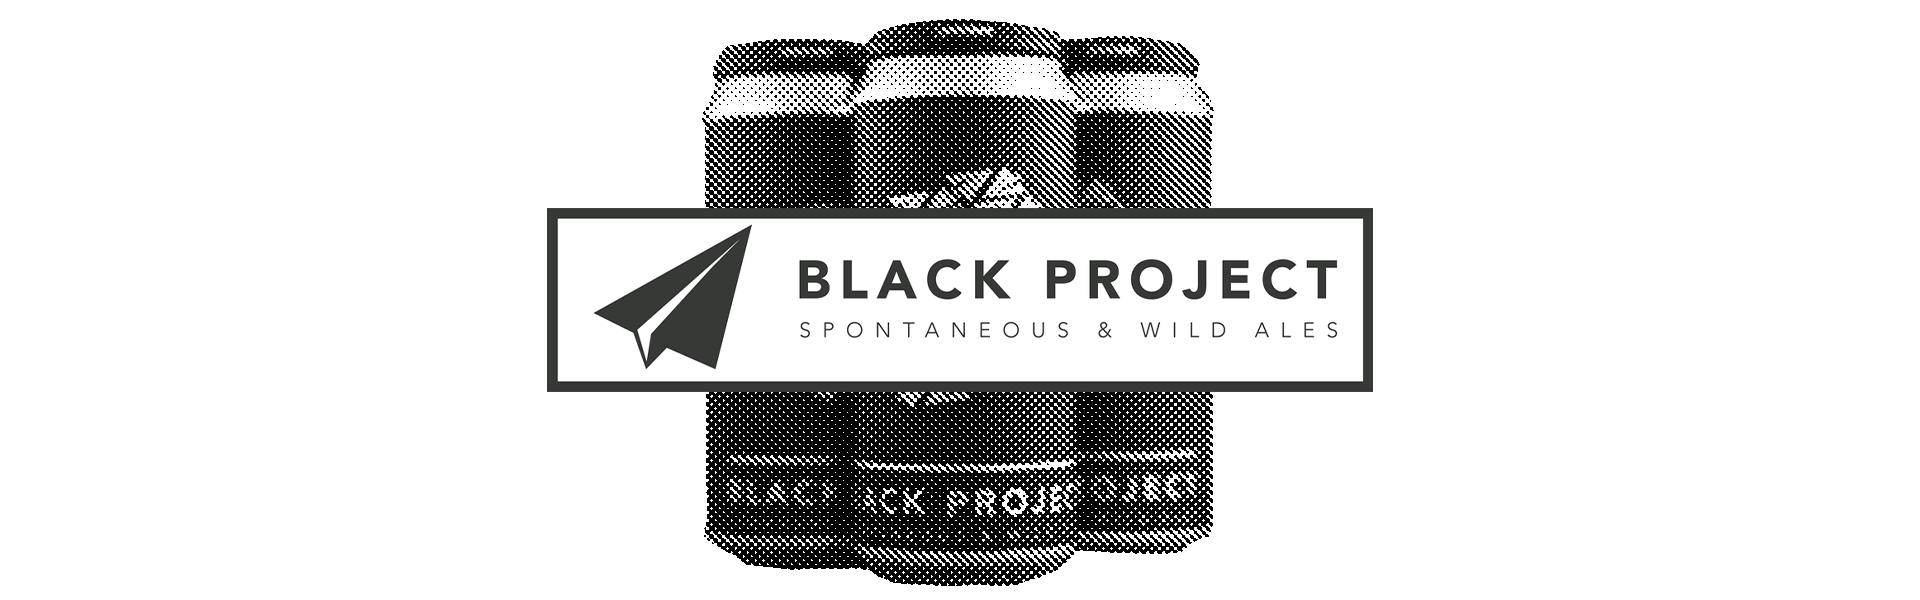 Black Project Spontaneous & Wild Ales